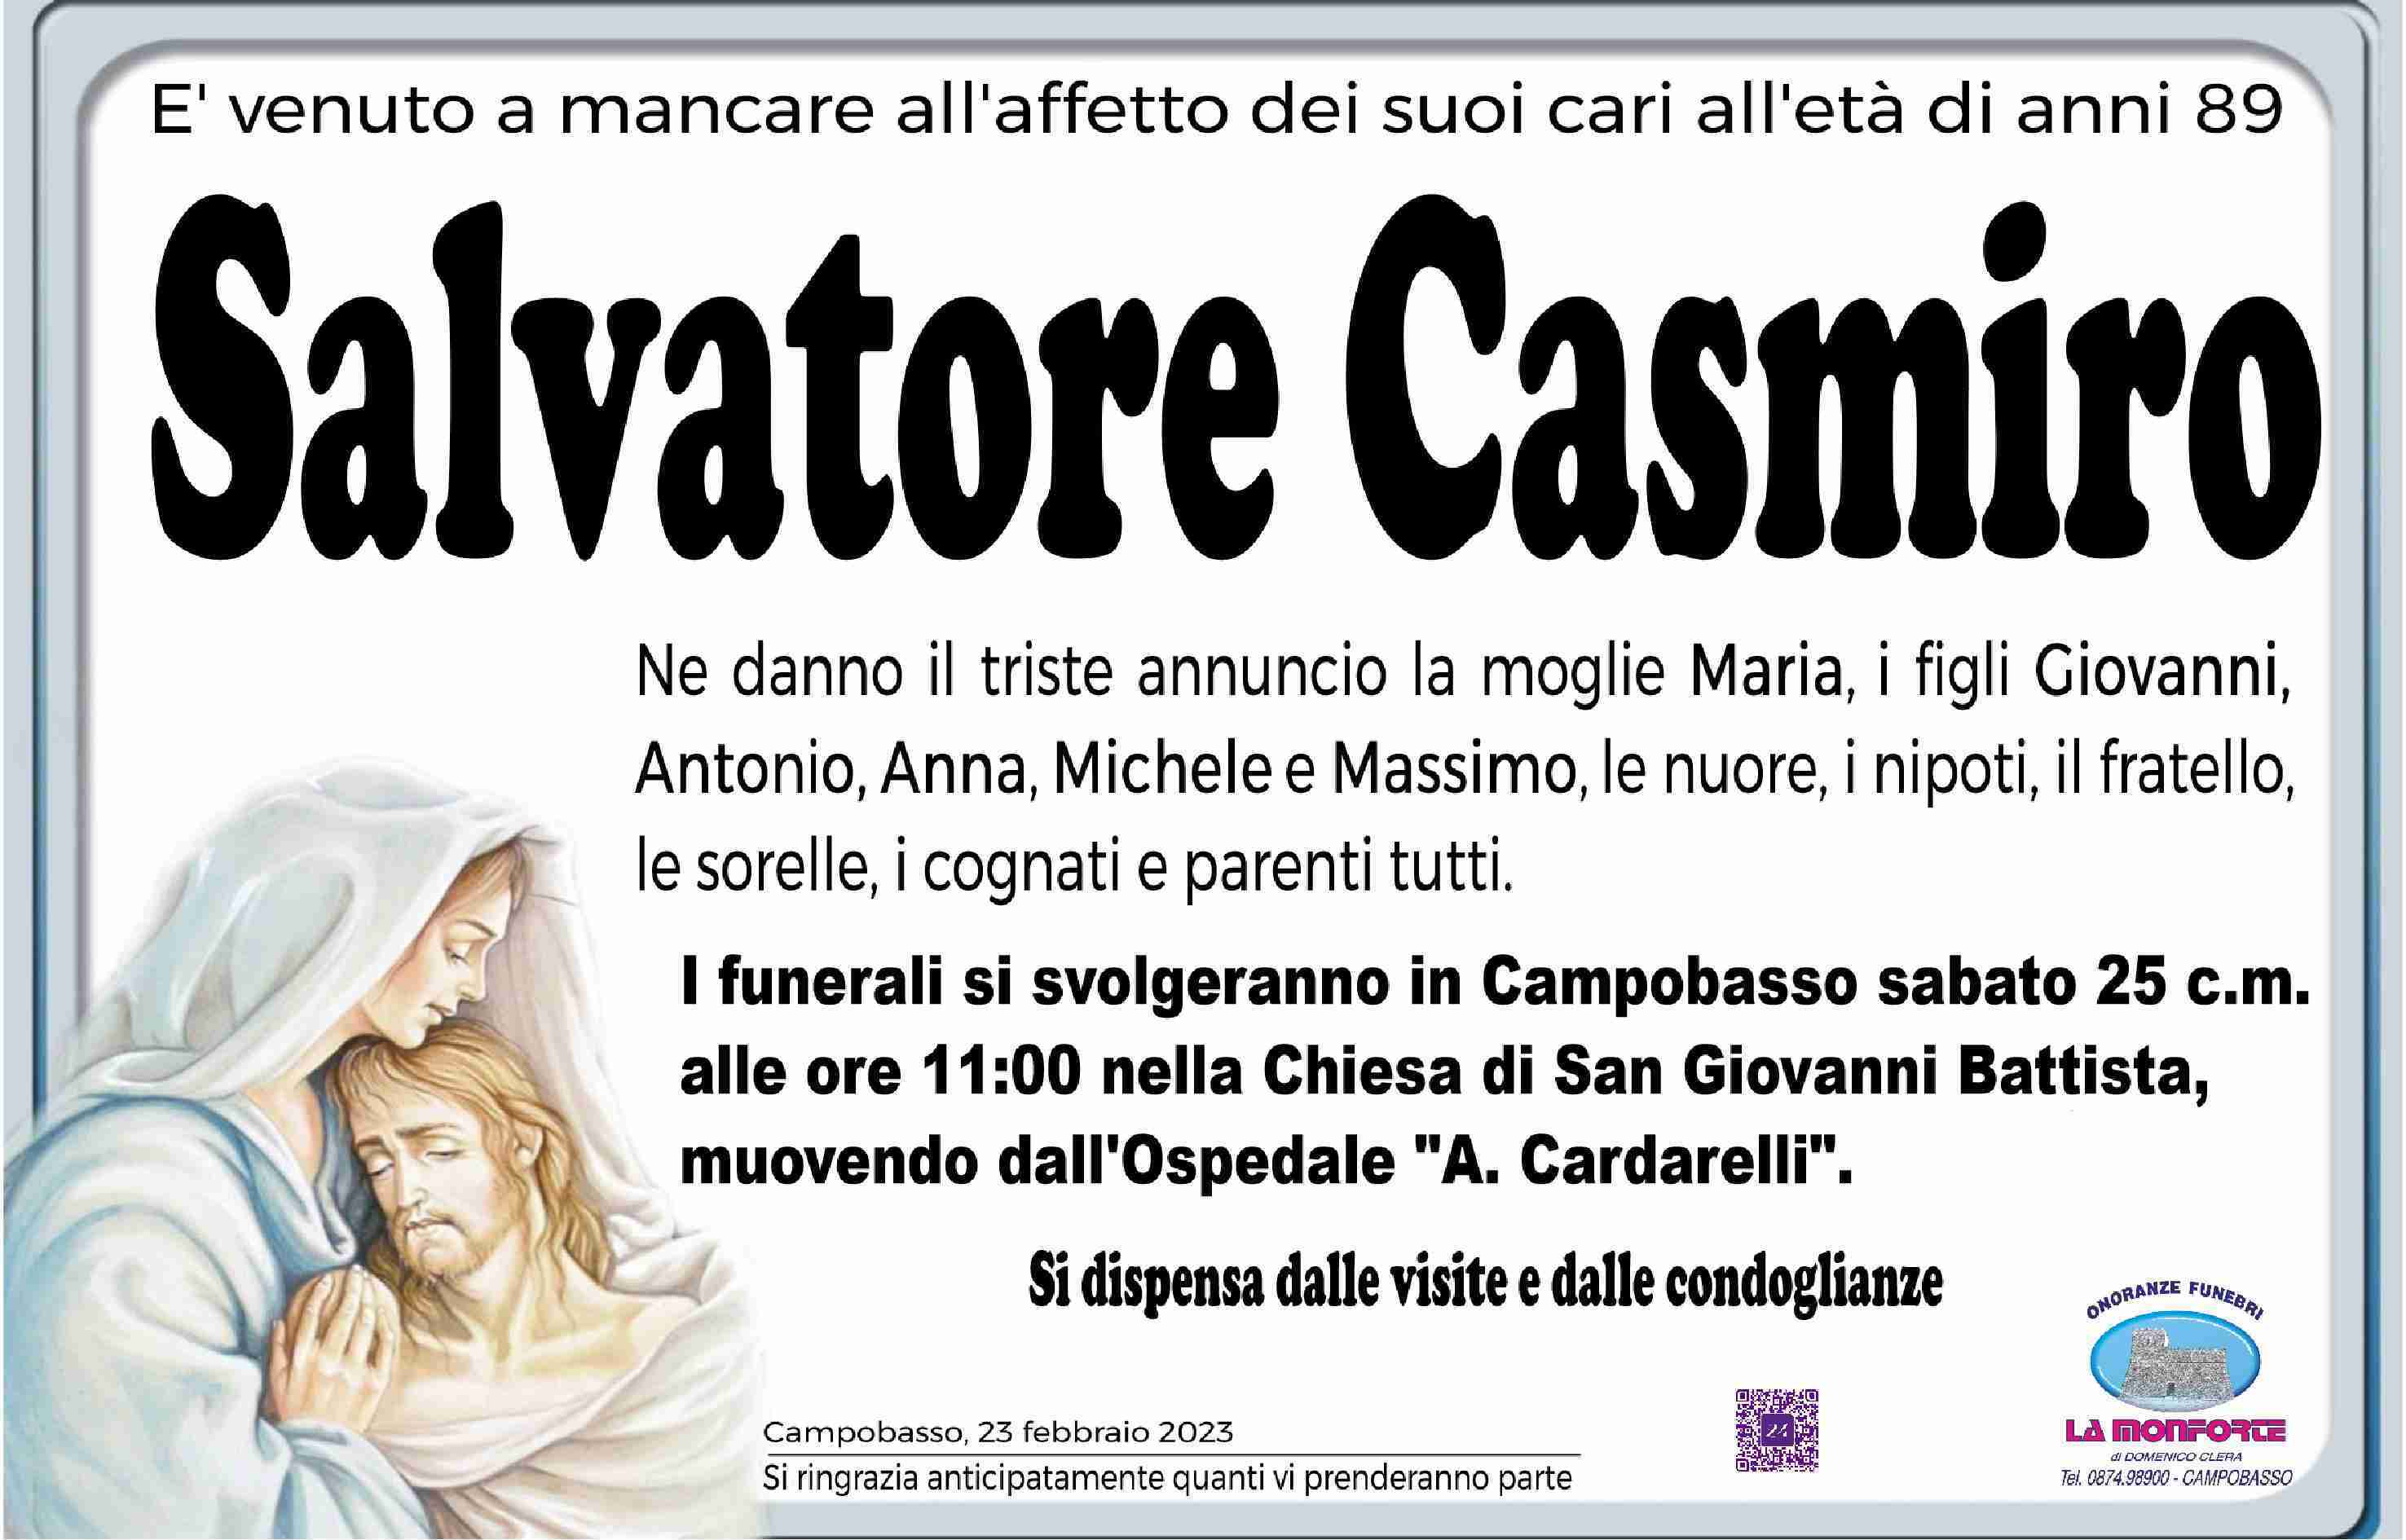 Salvatore Casmiro